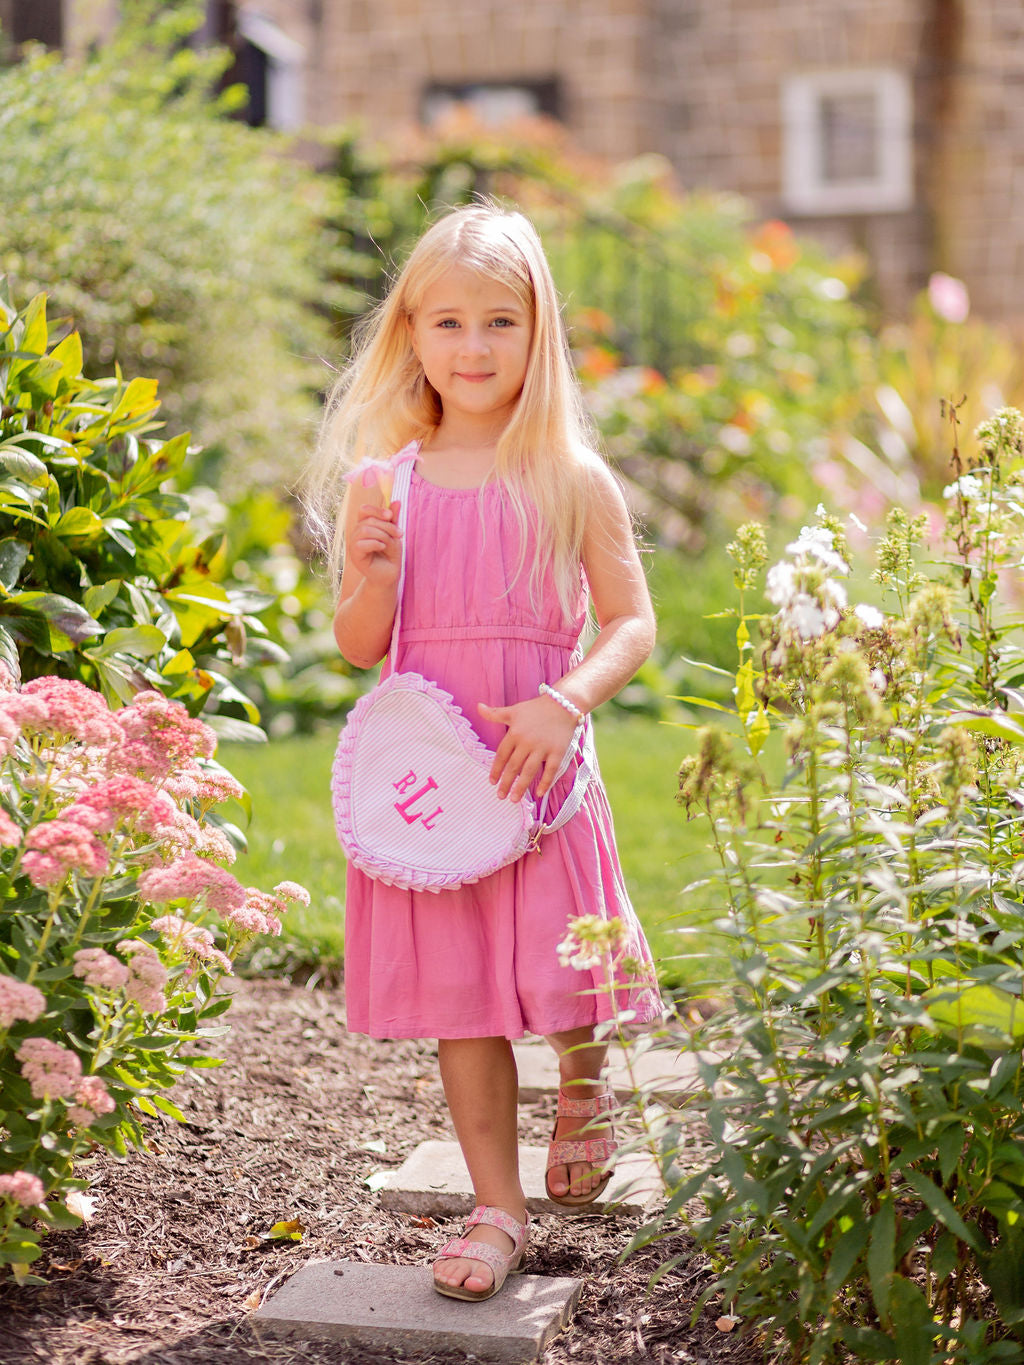 Kids Girls Handbag for Toddler and Child Tote Bag for Toddler Little Girl-Red  - Walmart.com